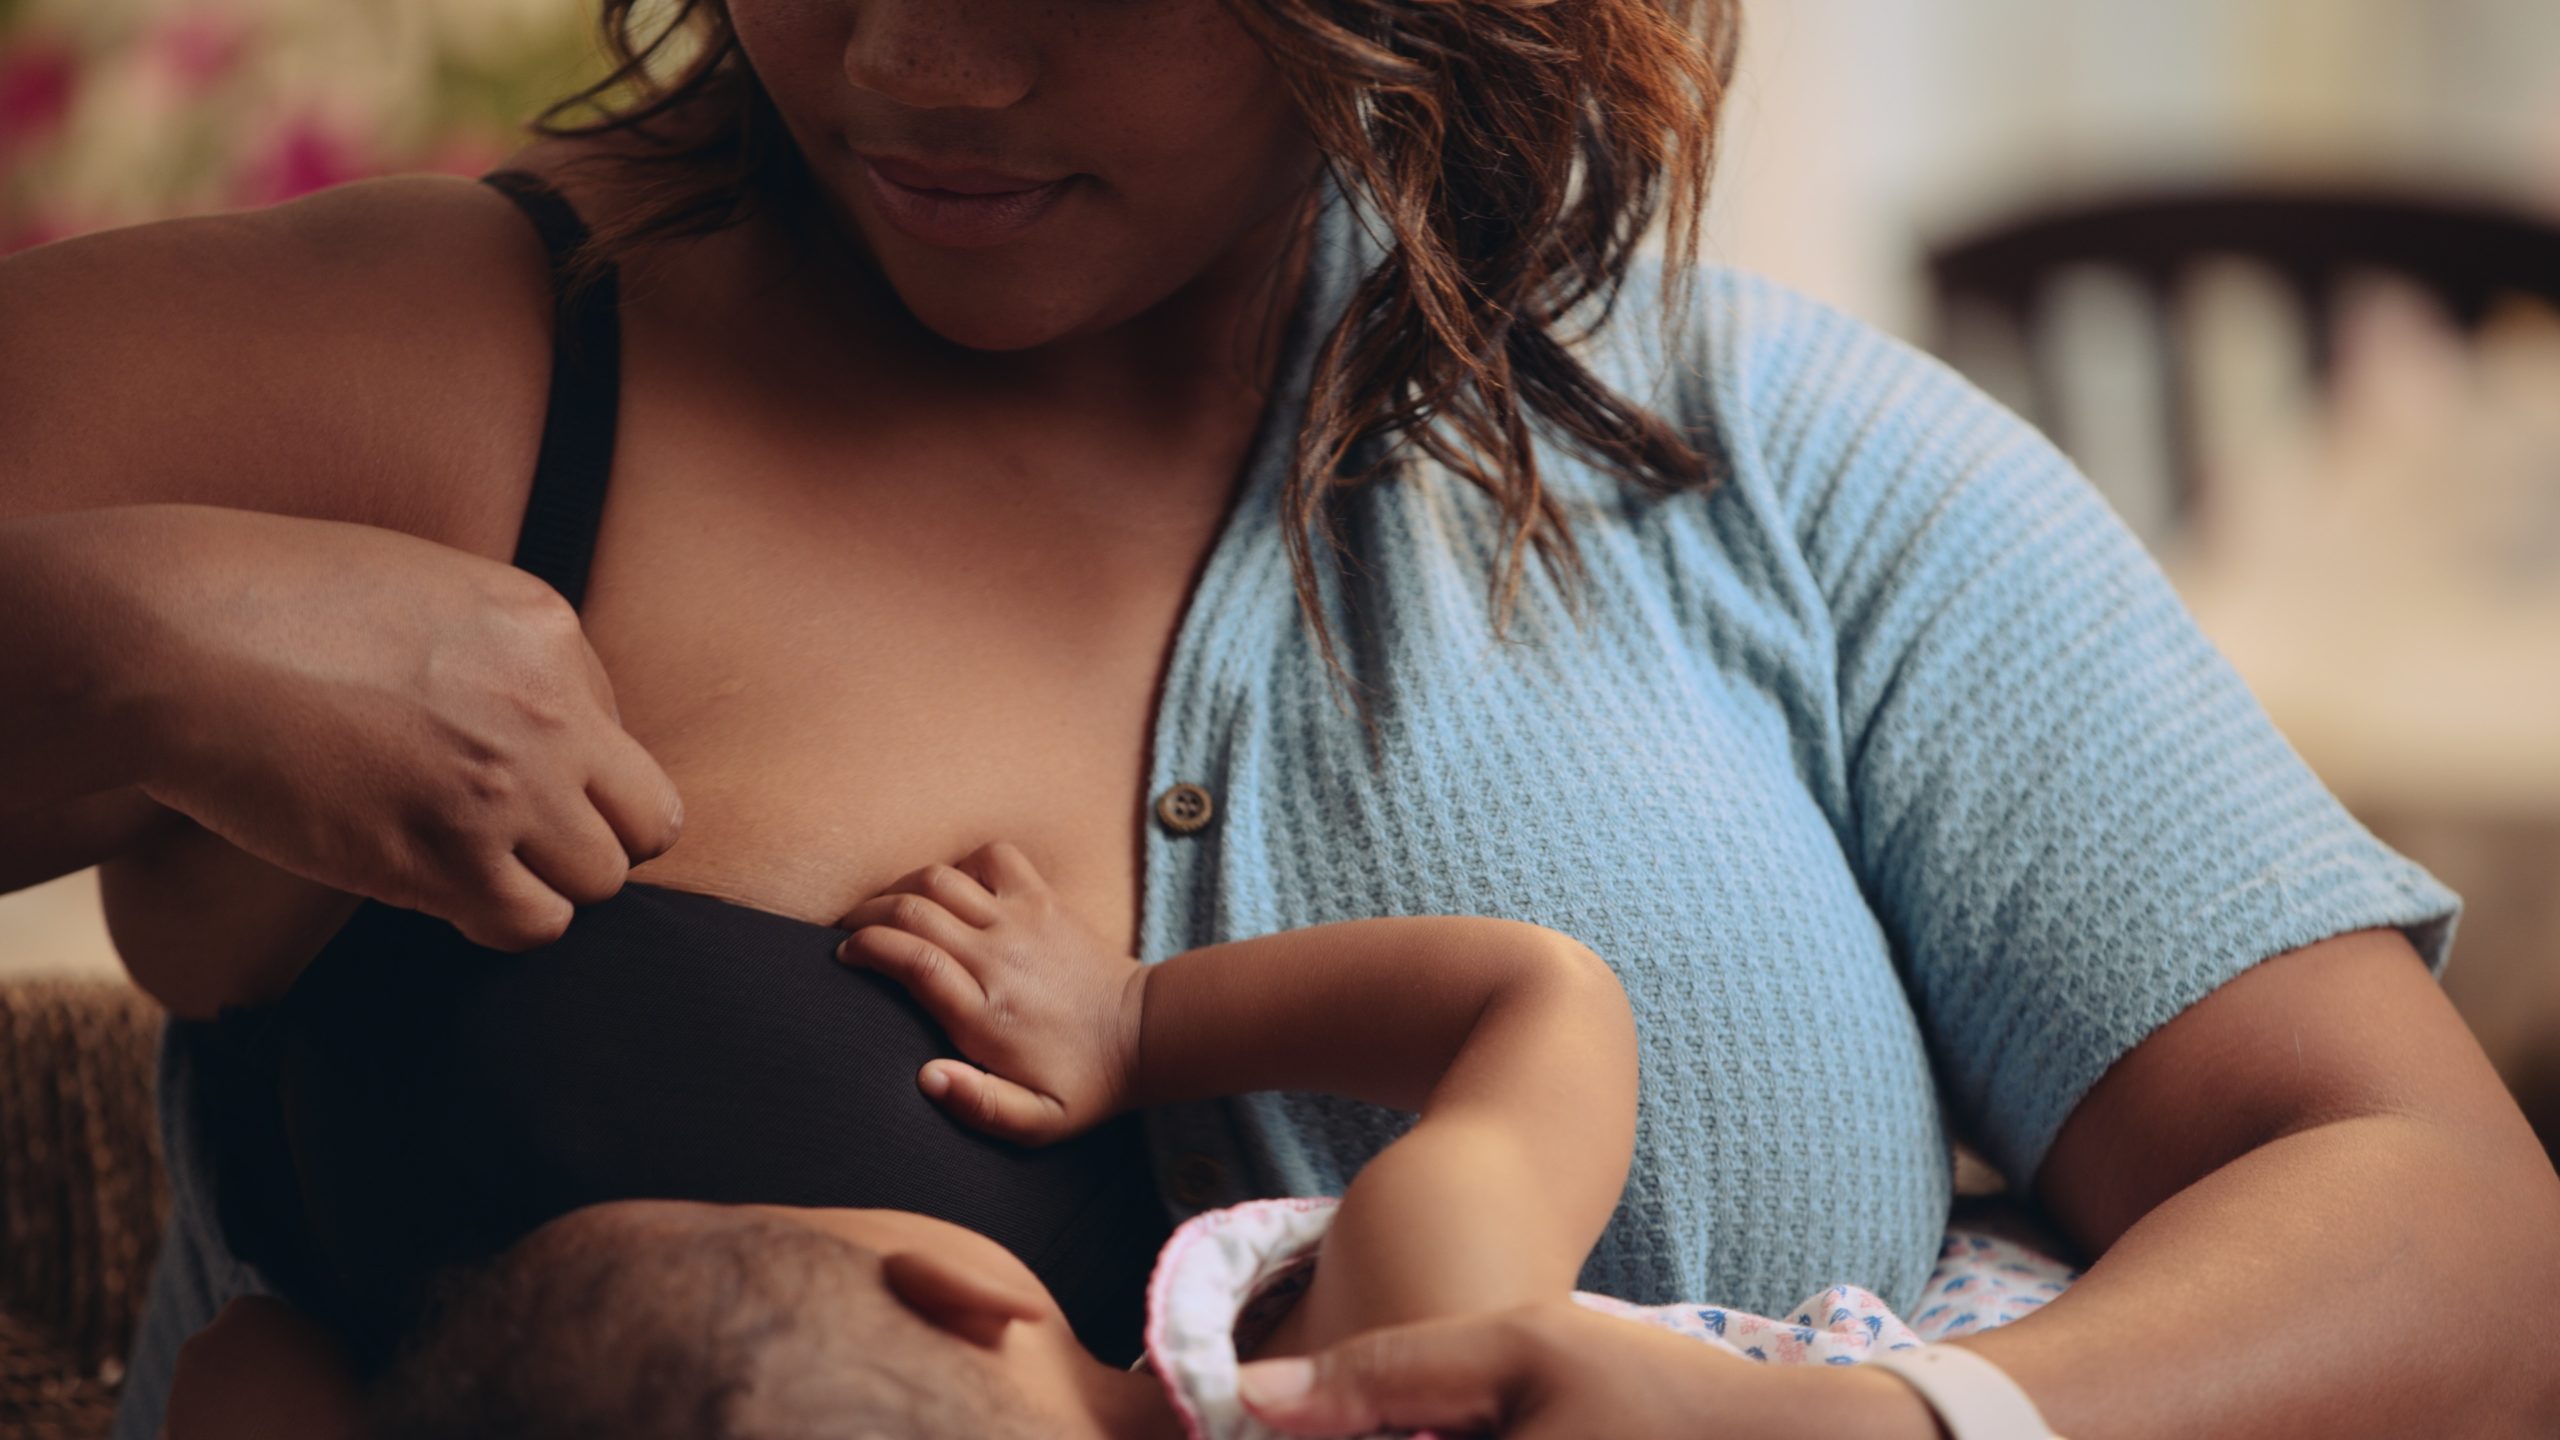 Closeup of woman breastfeeding a baby wearing the black bra